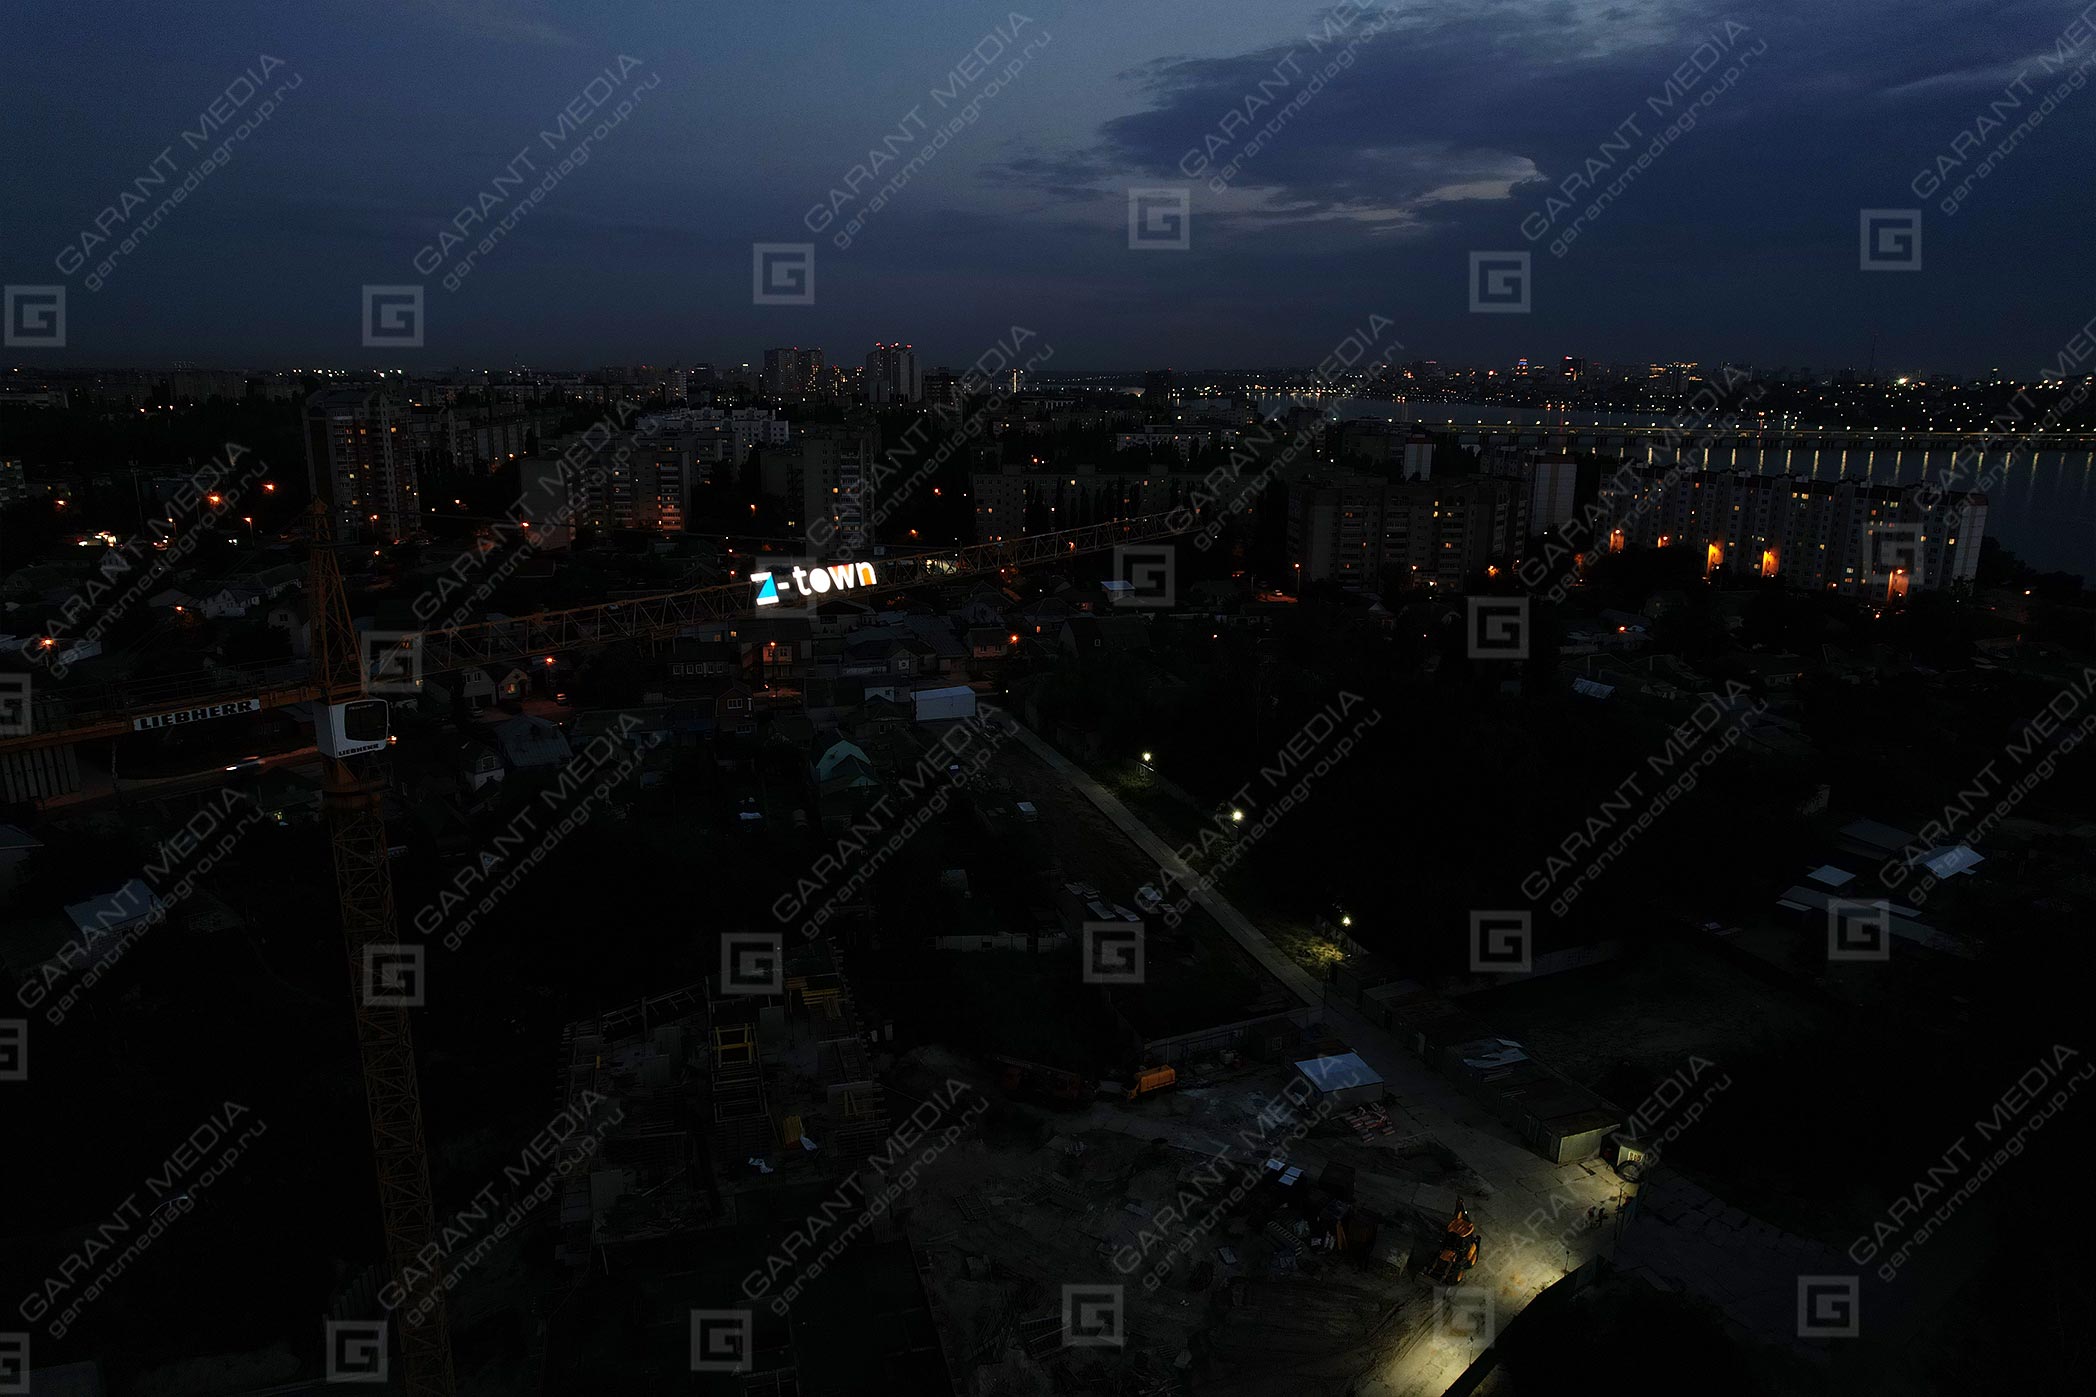 Подсветка башенного крана "Z-TOWN" в Воронеже